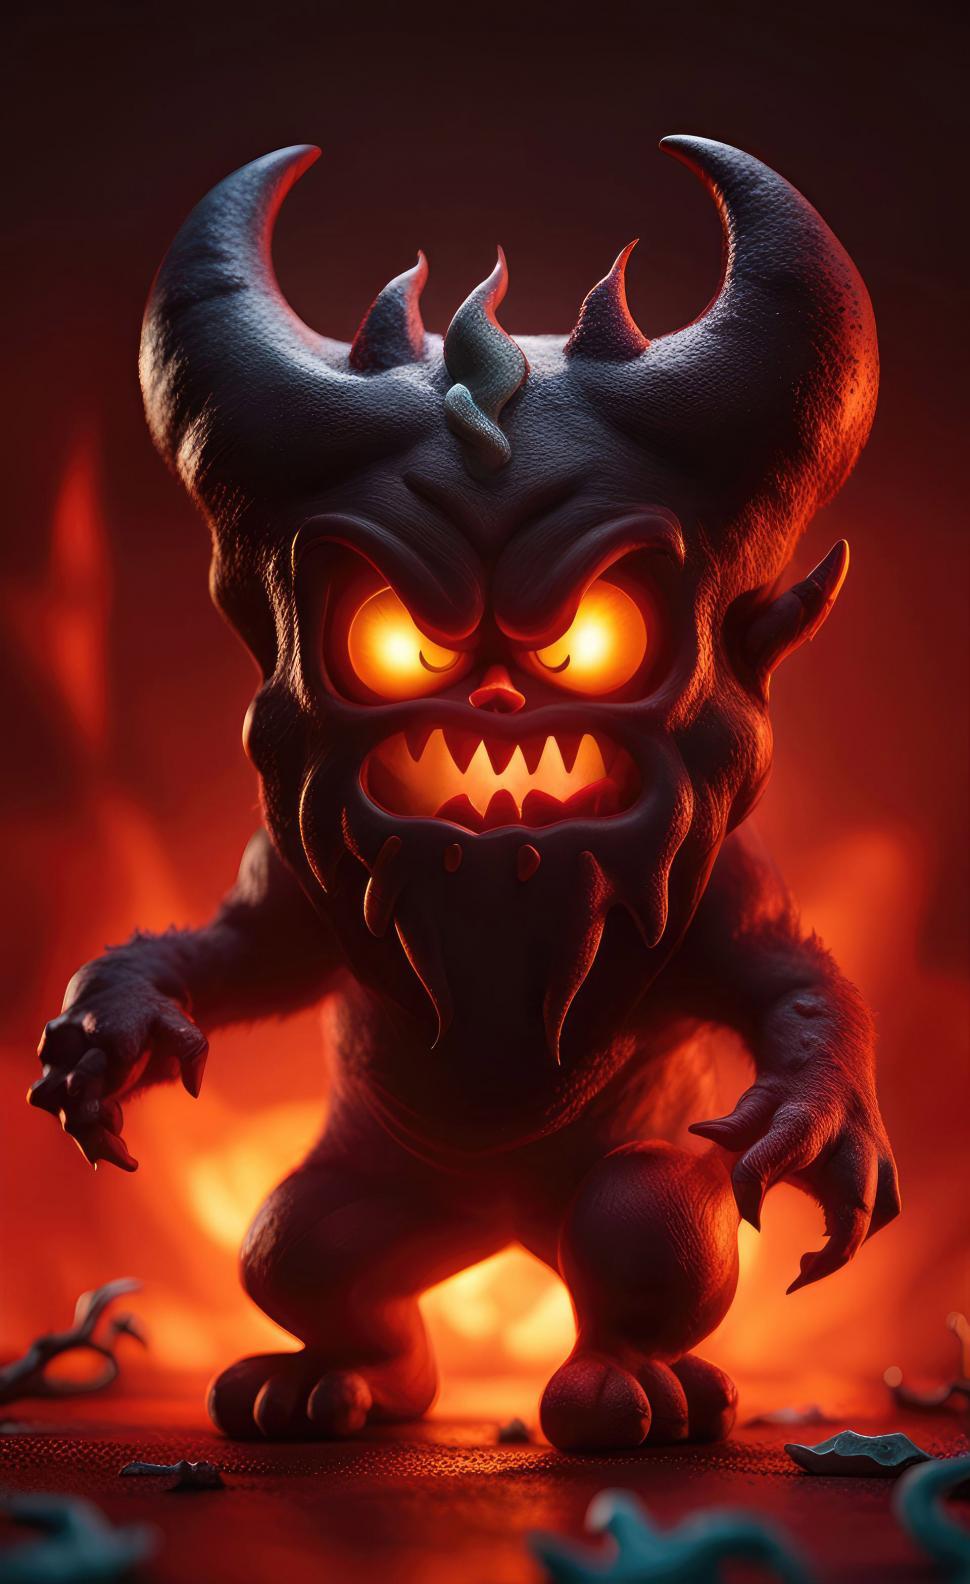 Free Image of Spooky halloween devil monster  